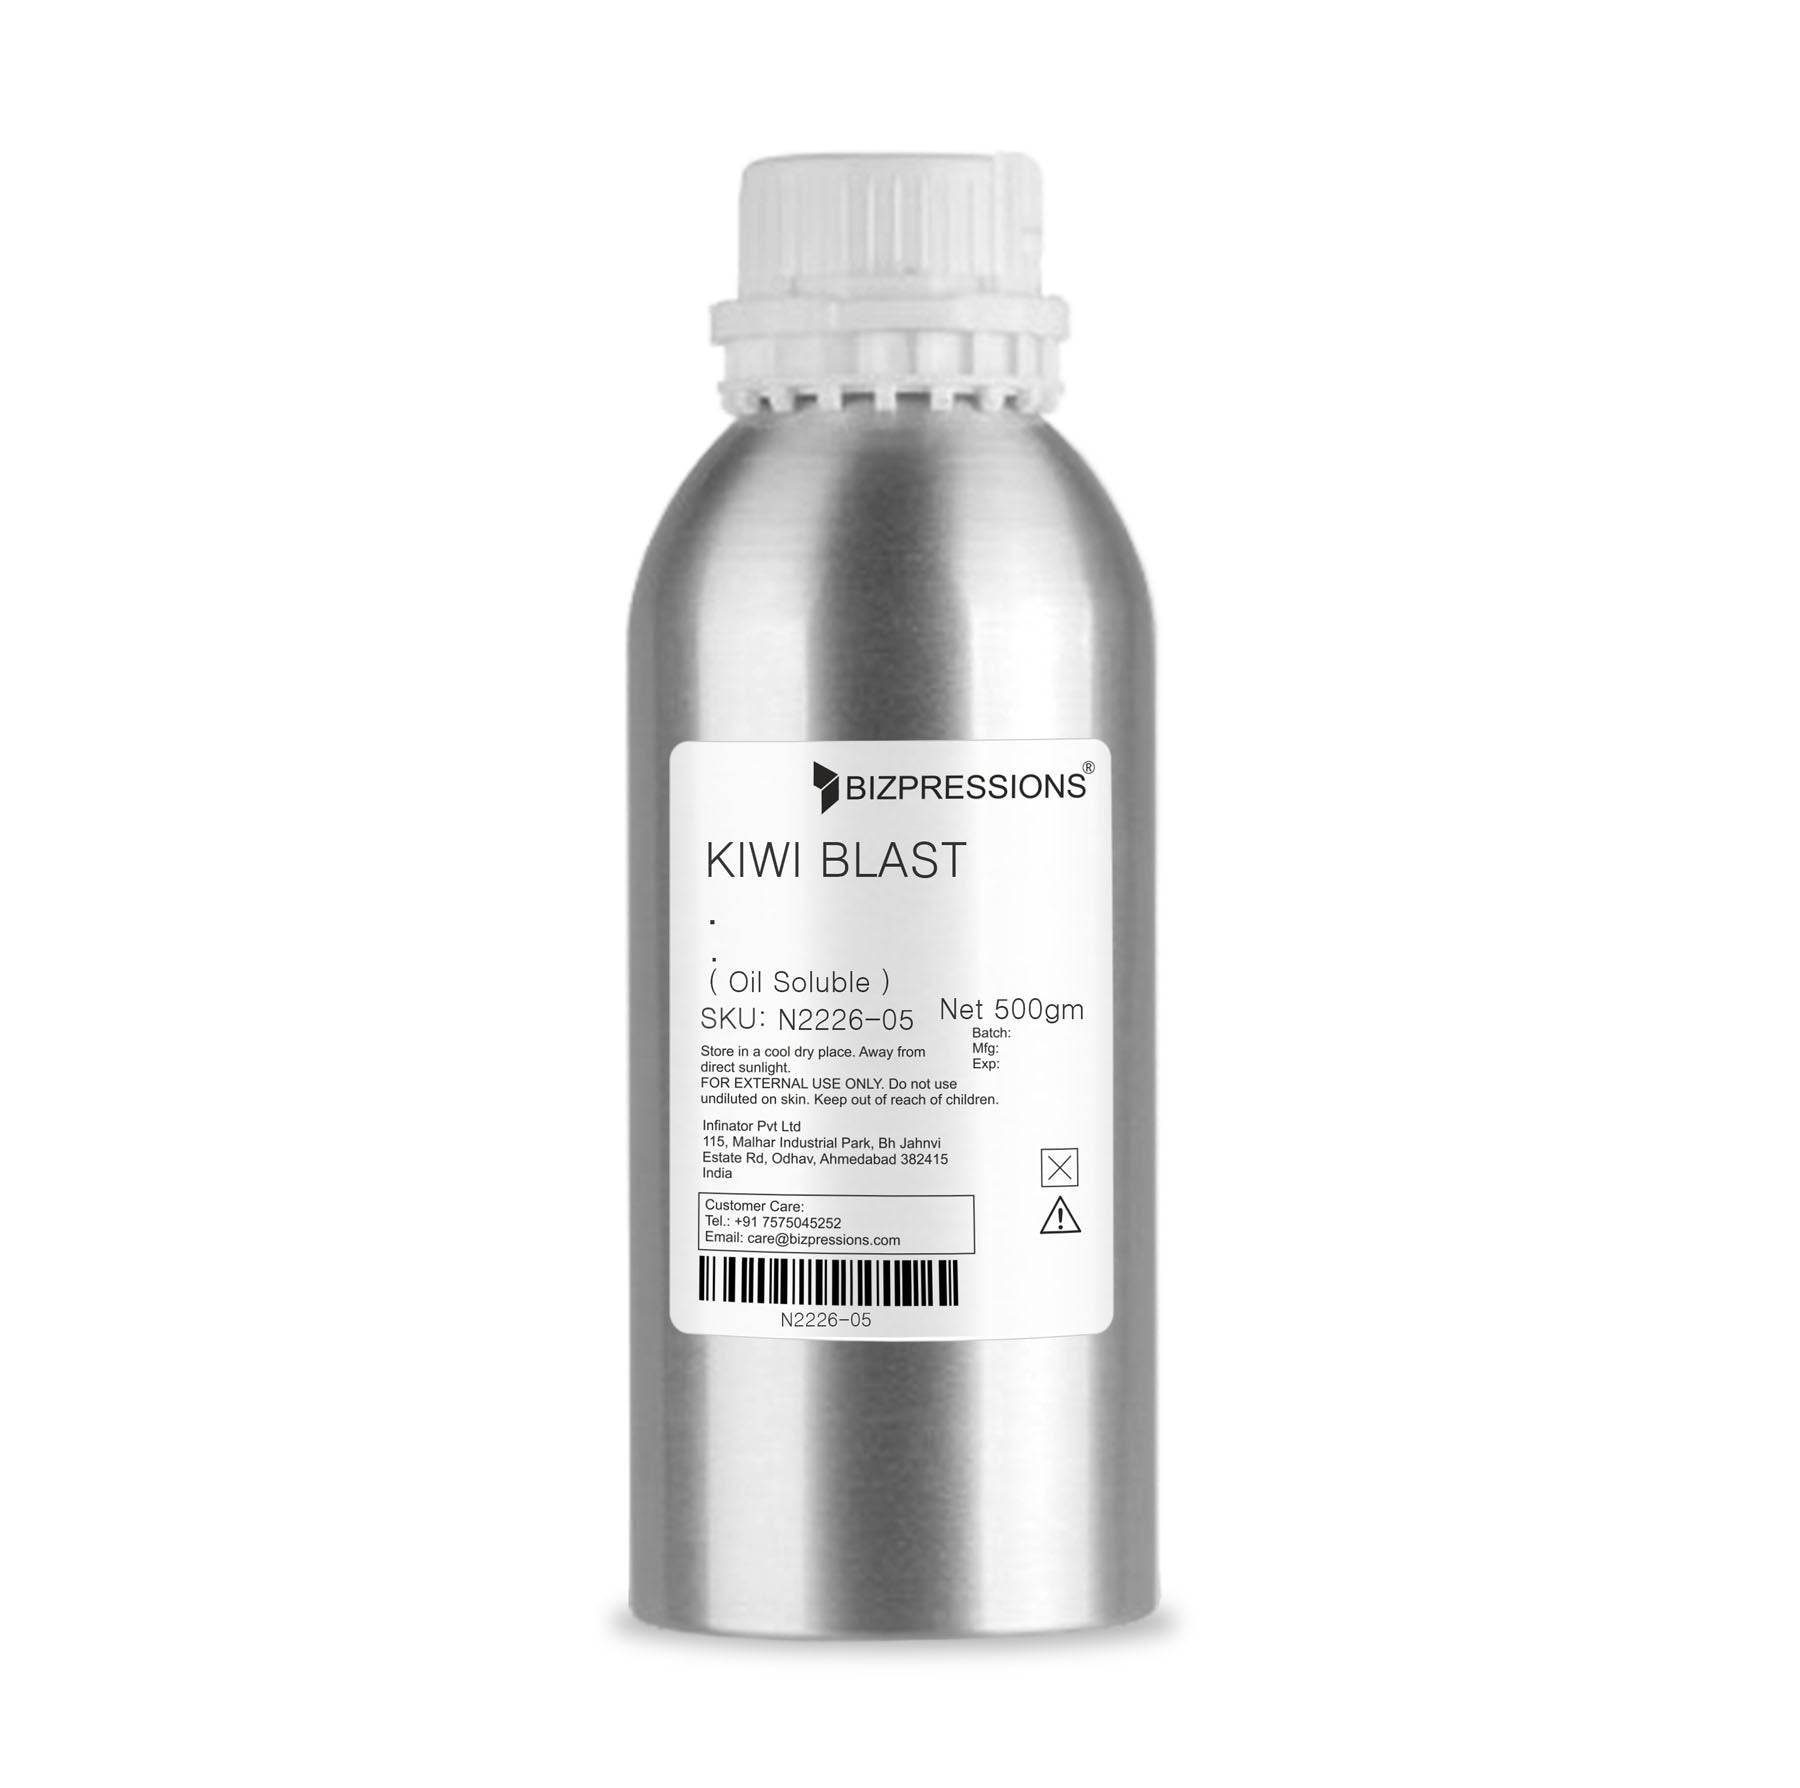 KIWI BLAST - Fragrance ( Oil Soluble ) - 500 gm